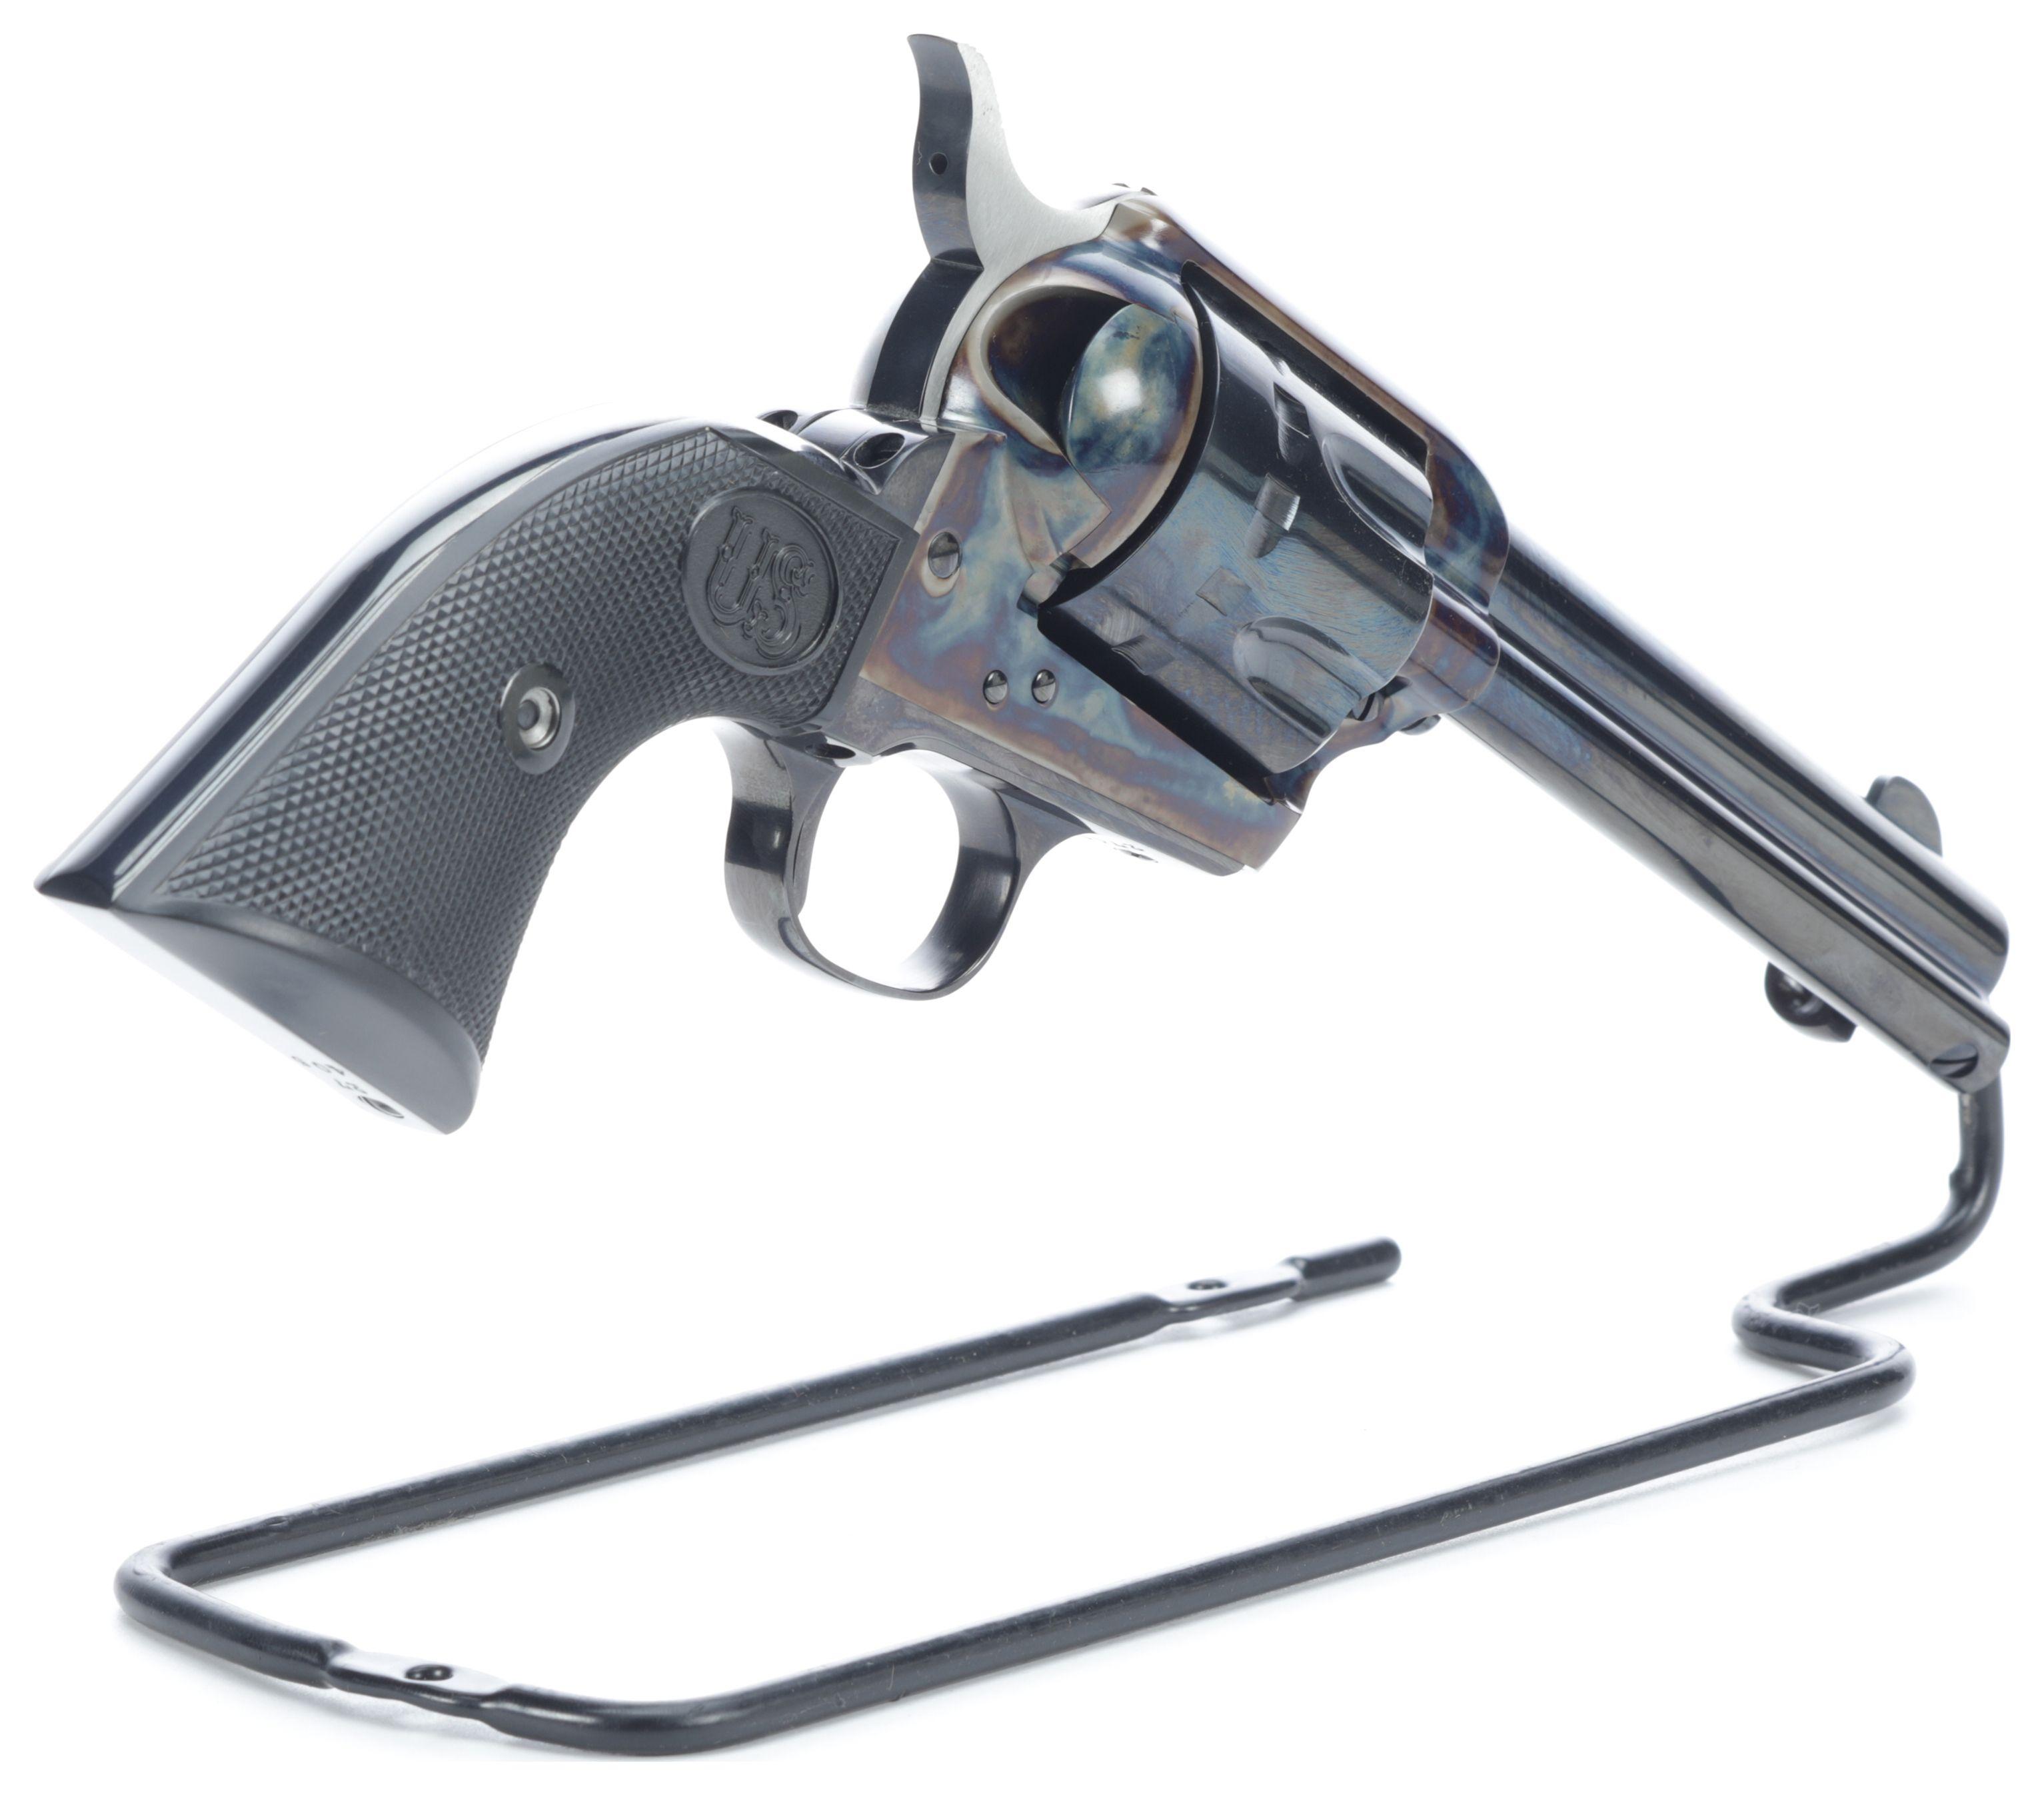 U.S. Firearms Mfg. Co. Single Action Army Model 12/22 Revolver